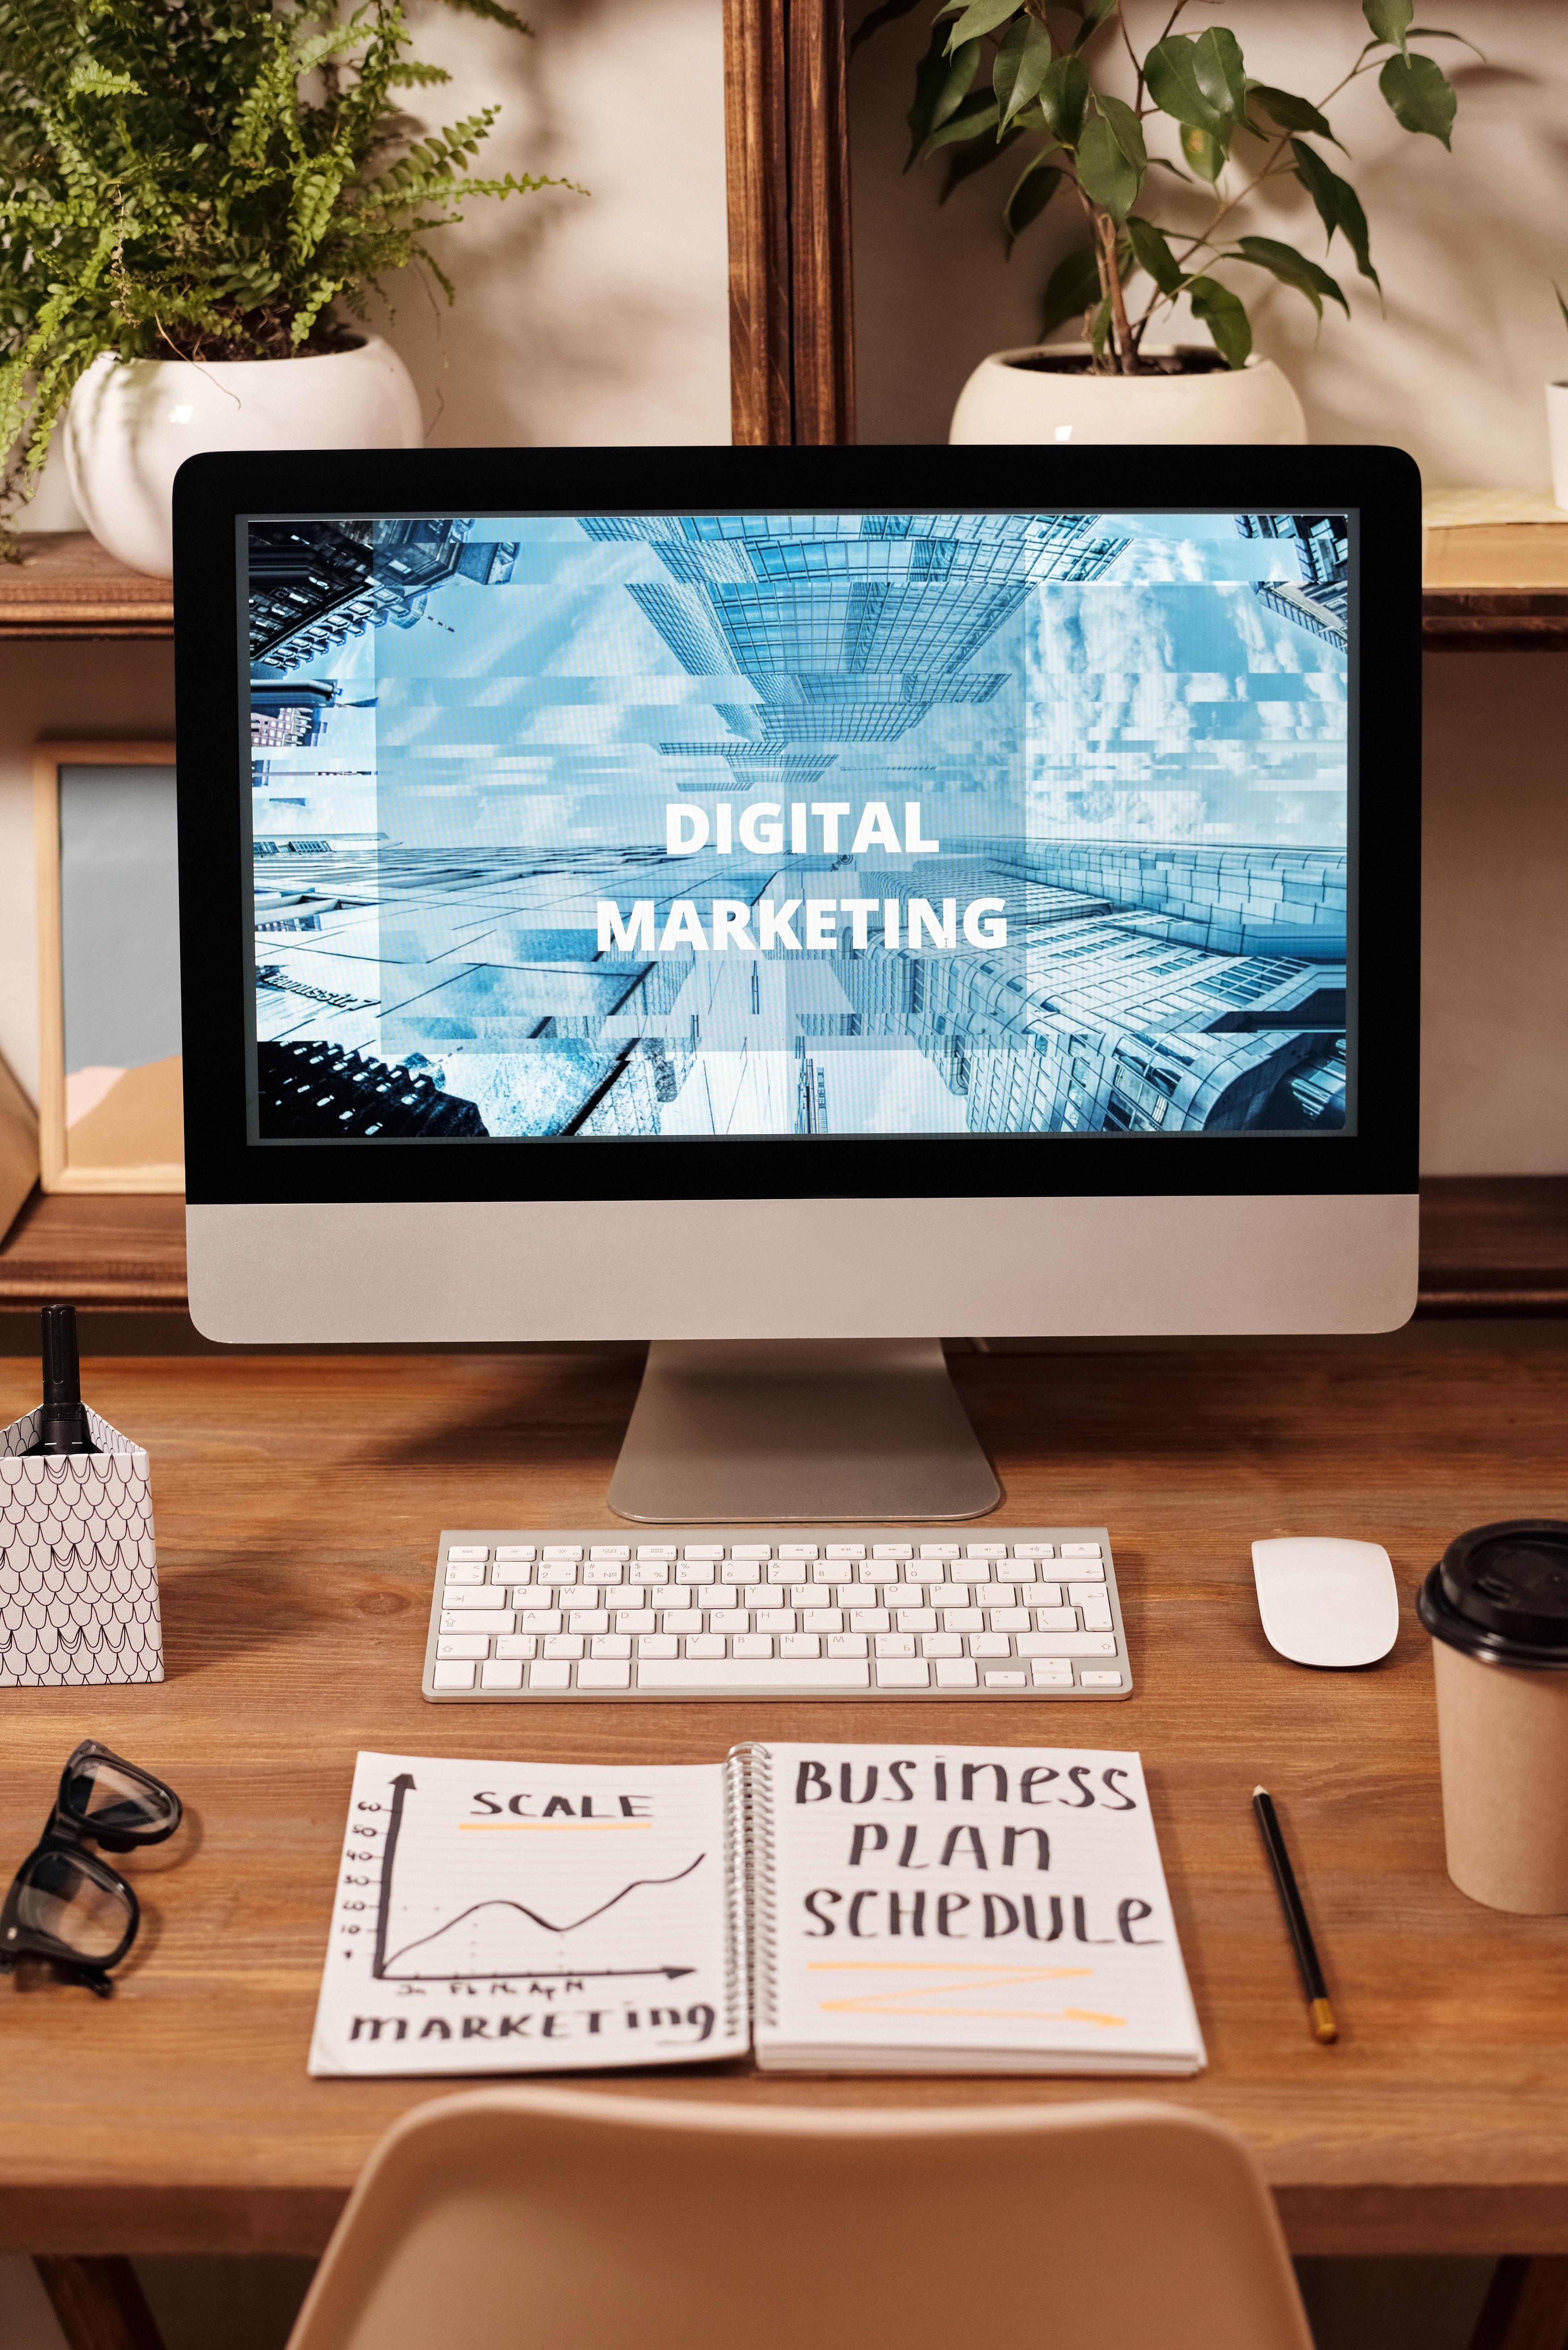 agencias marketing digital